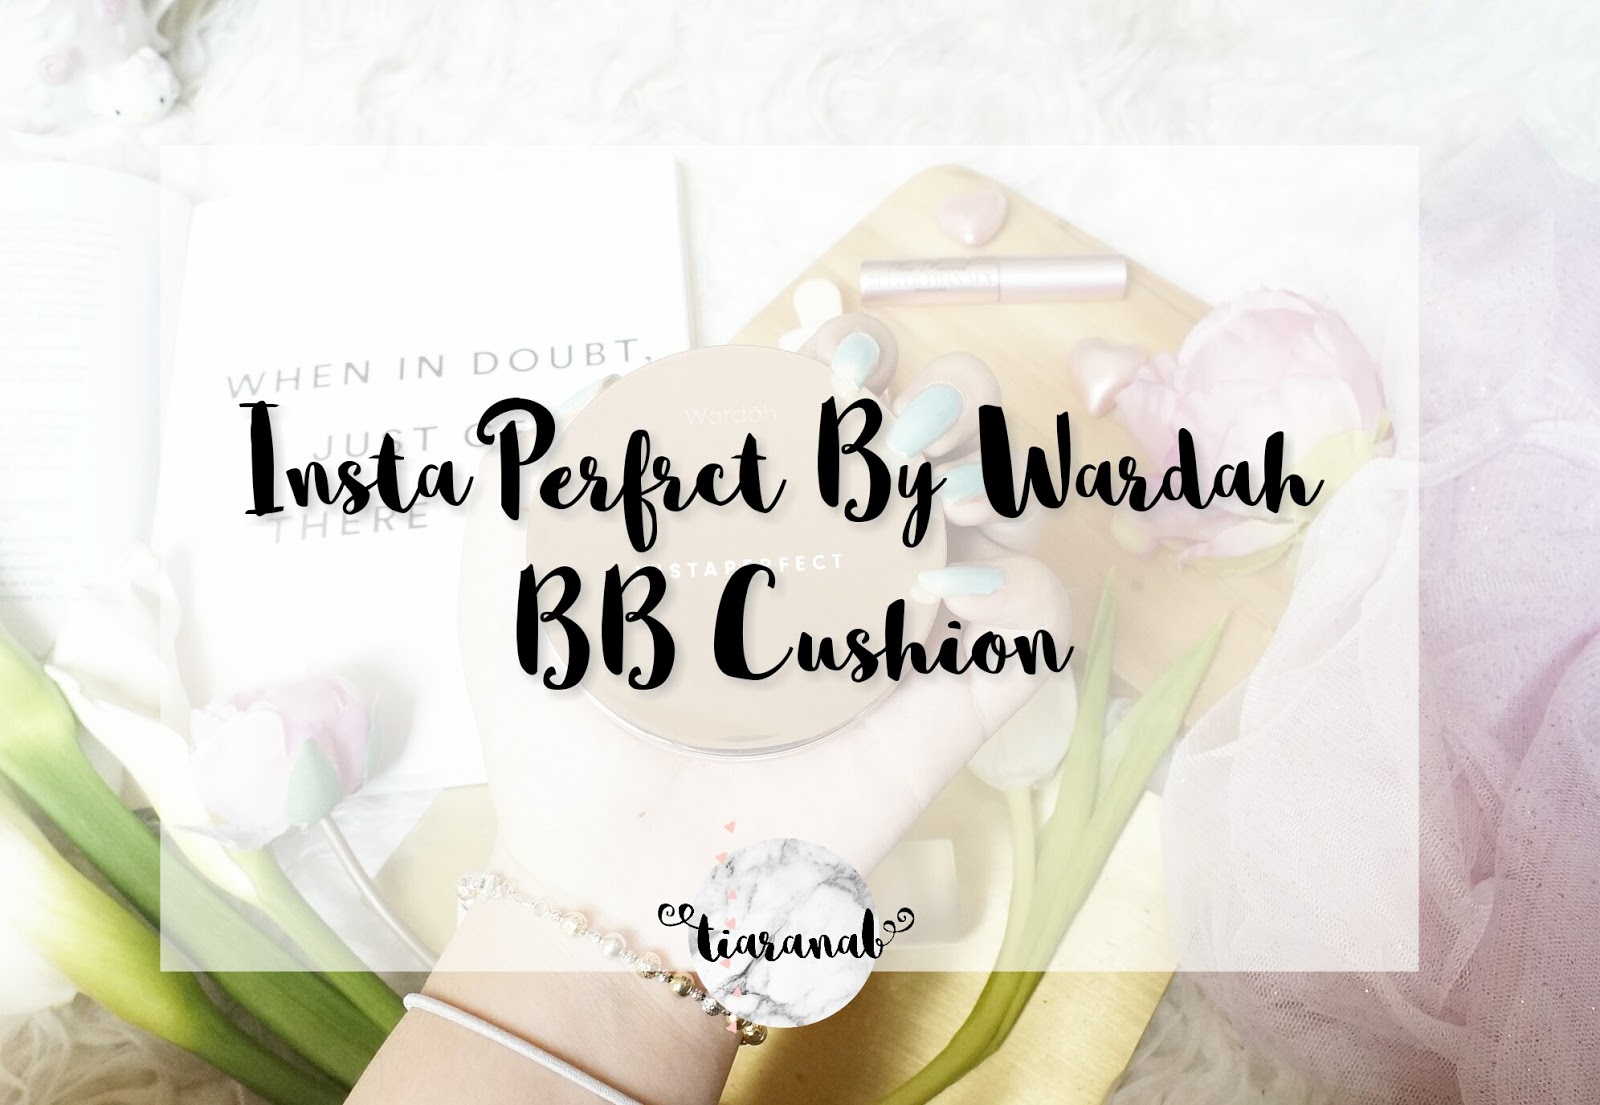 [Honest Review] BB Cushion Wardah - Wardah Instaperfect